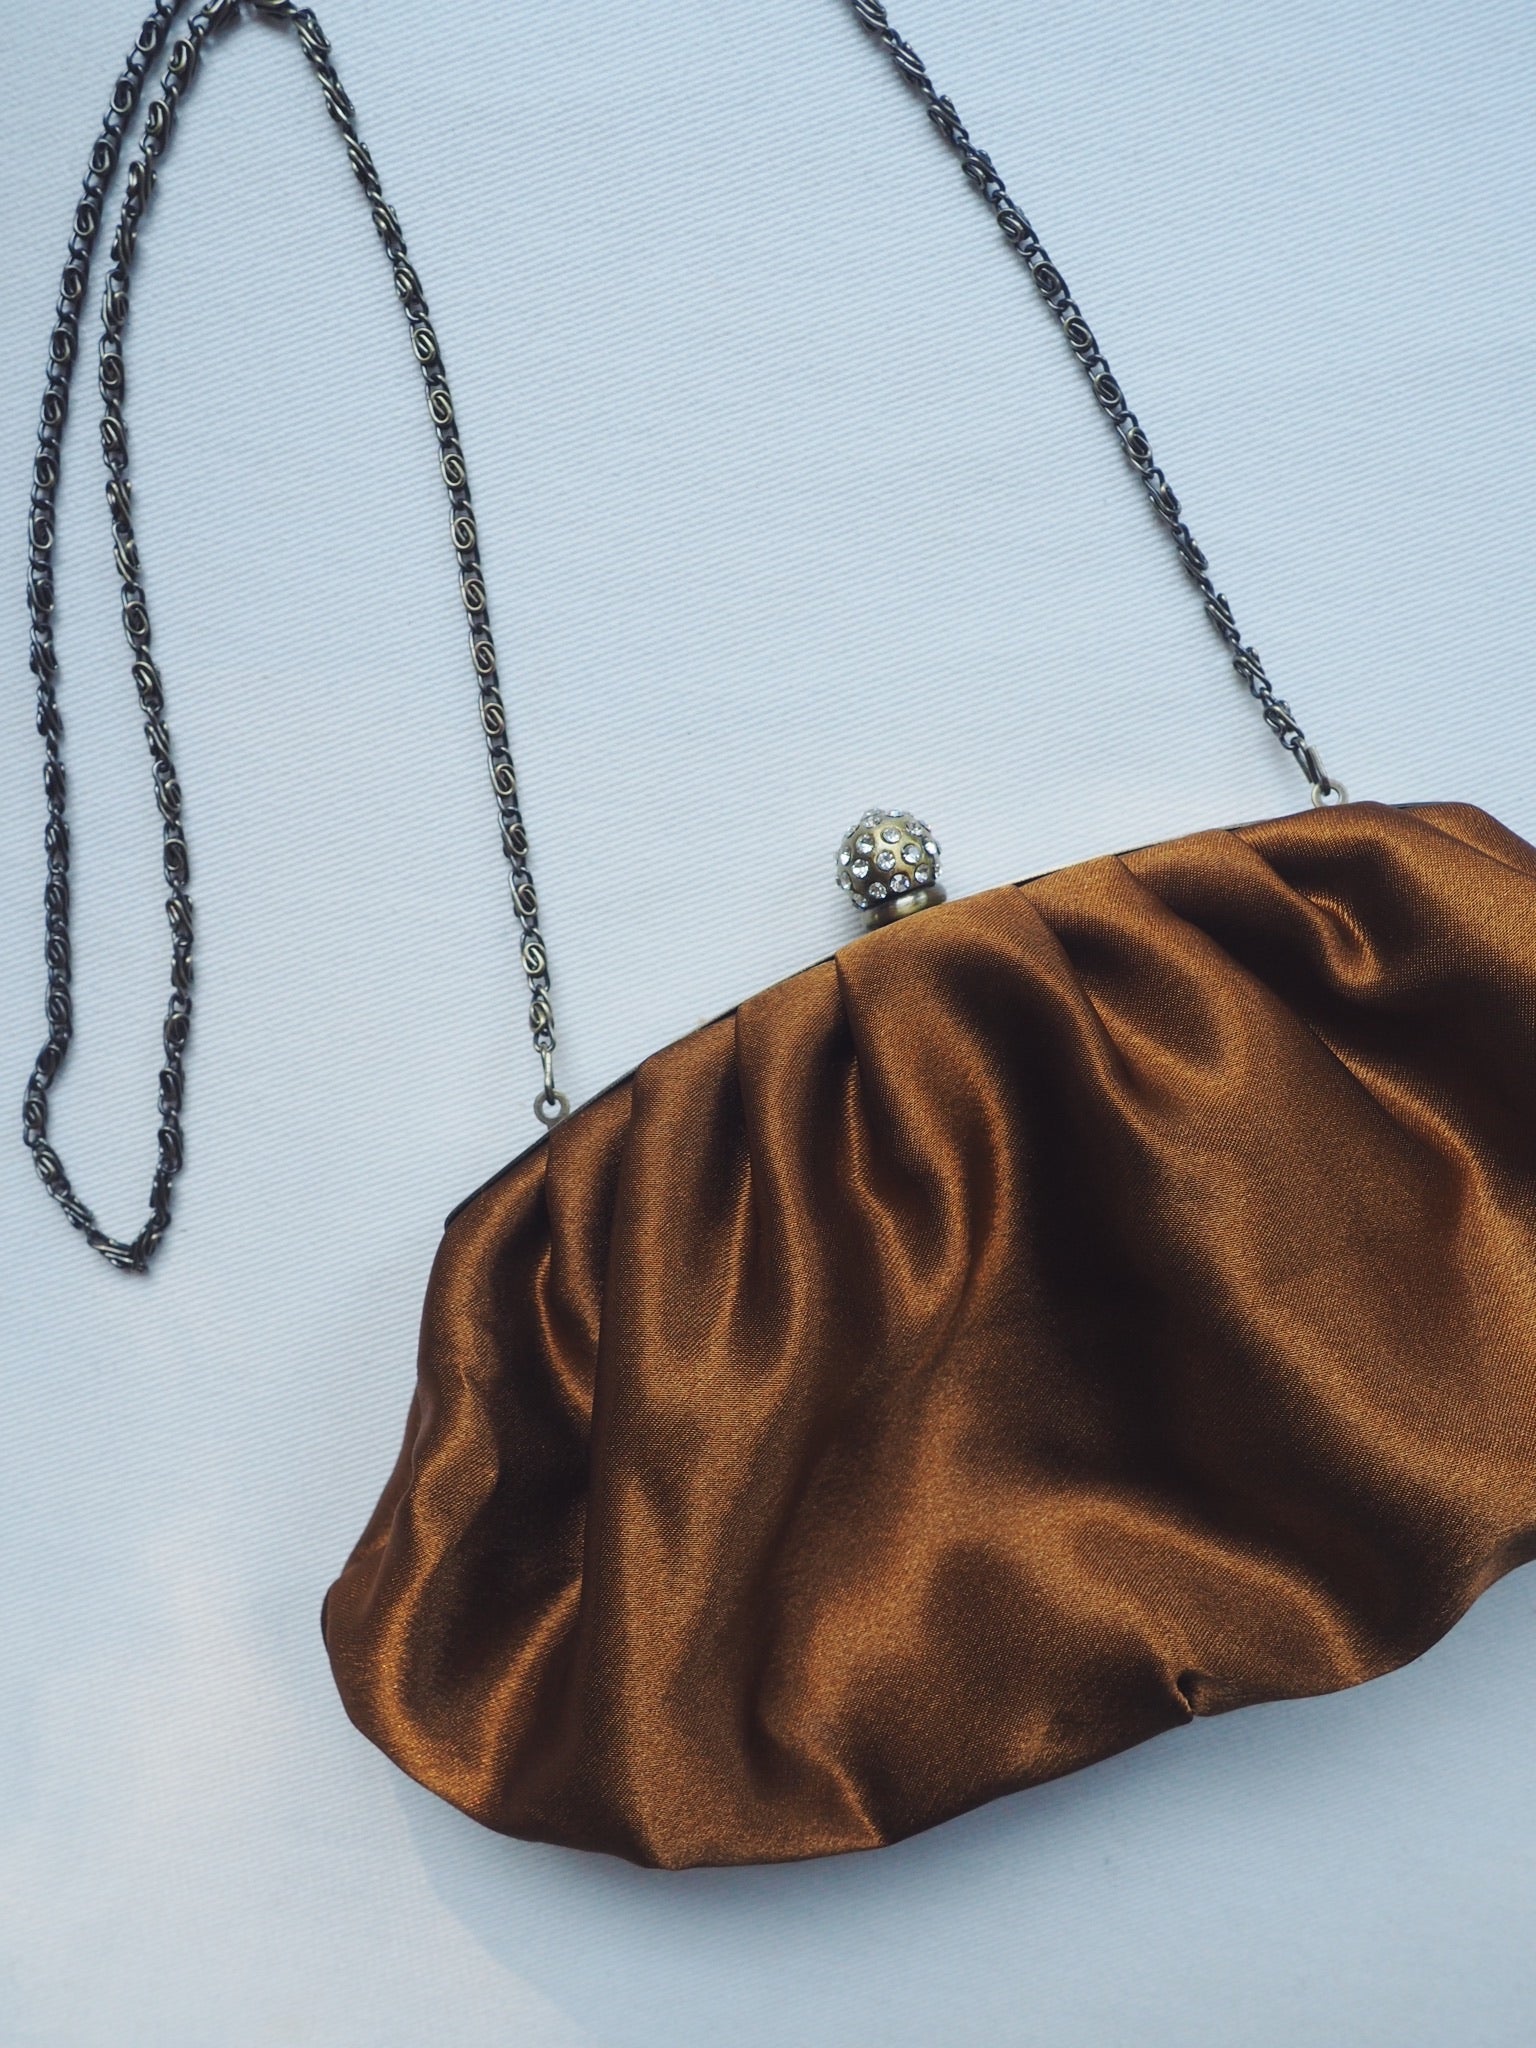 Small Antique Copper Handbag. - Etsy